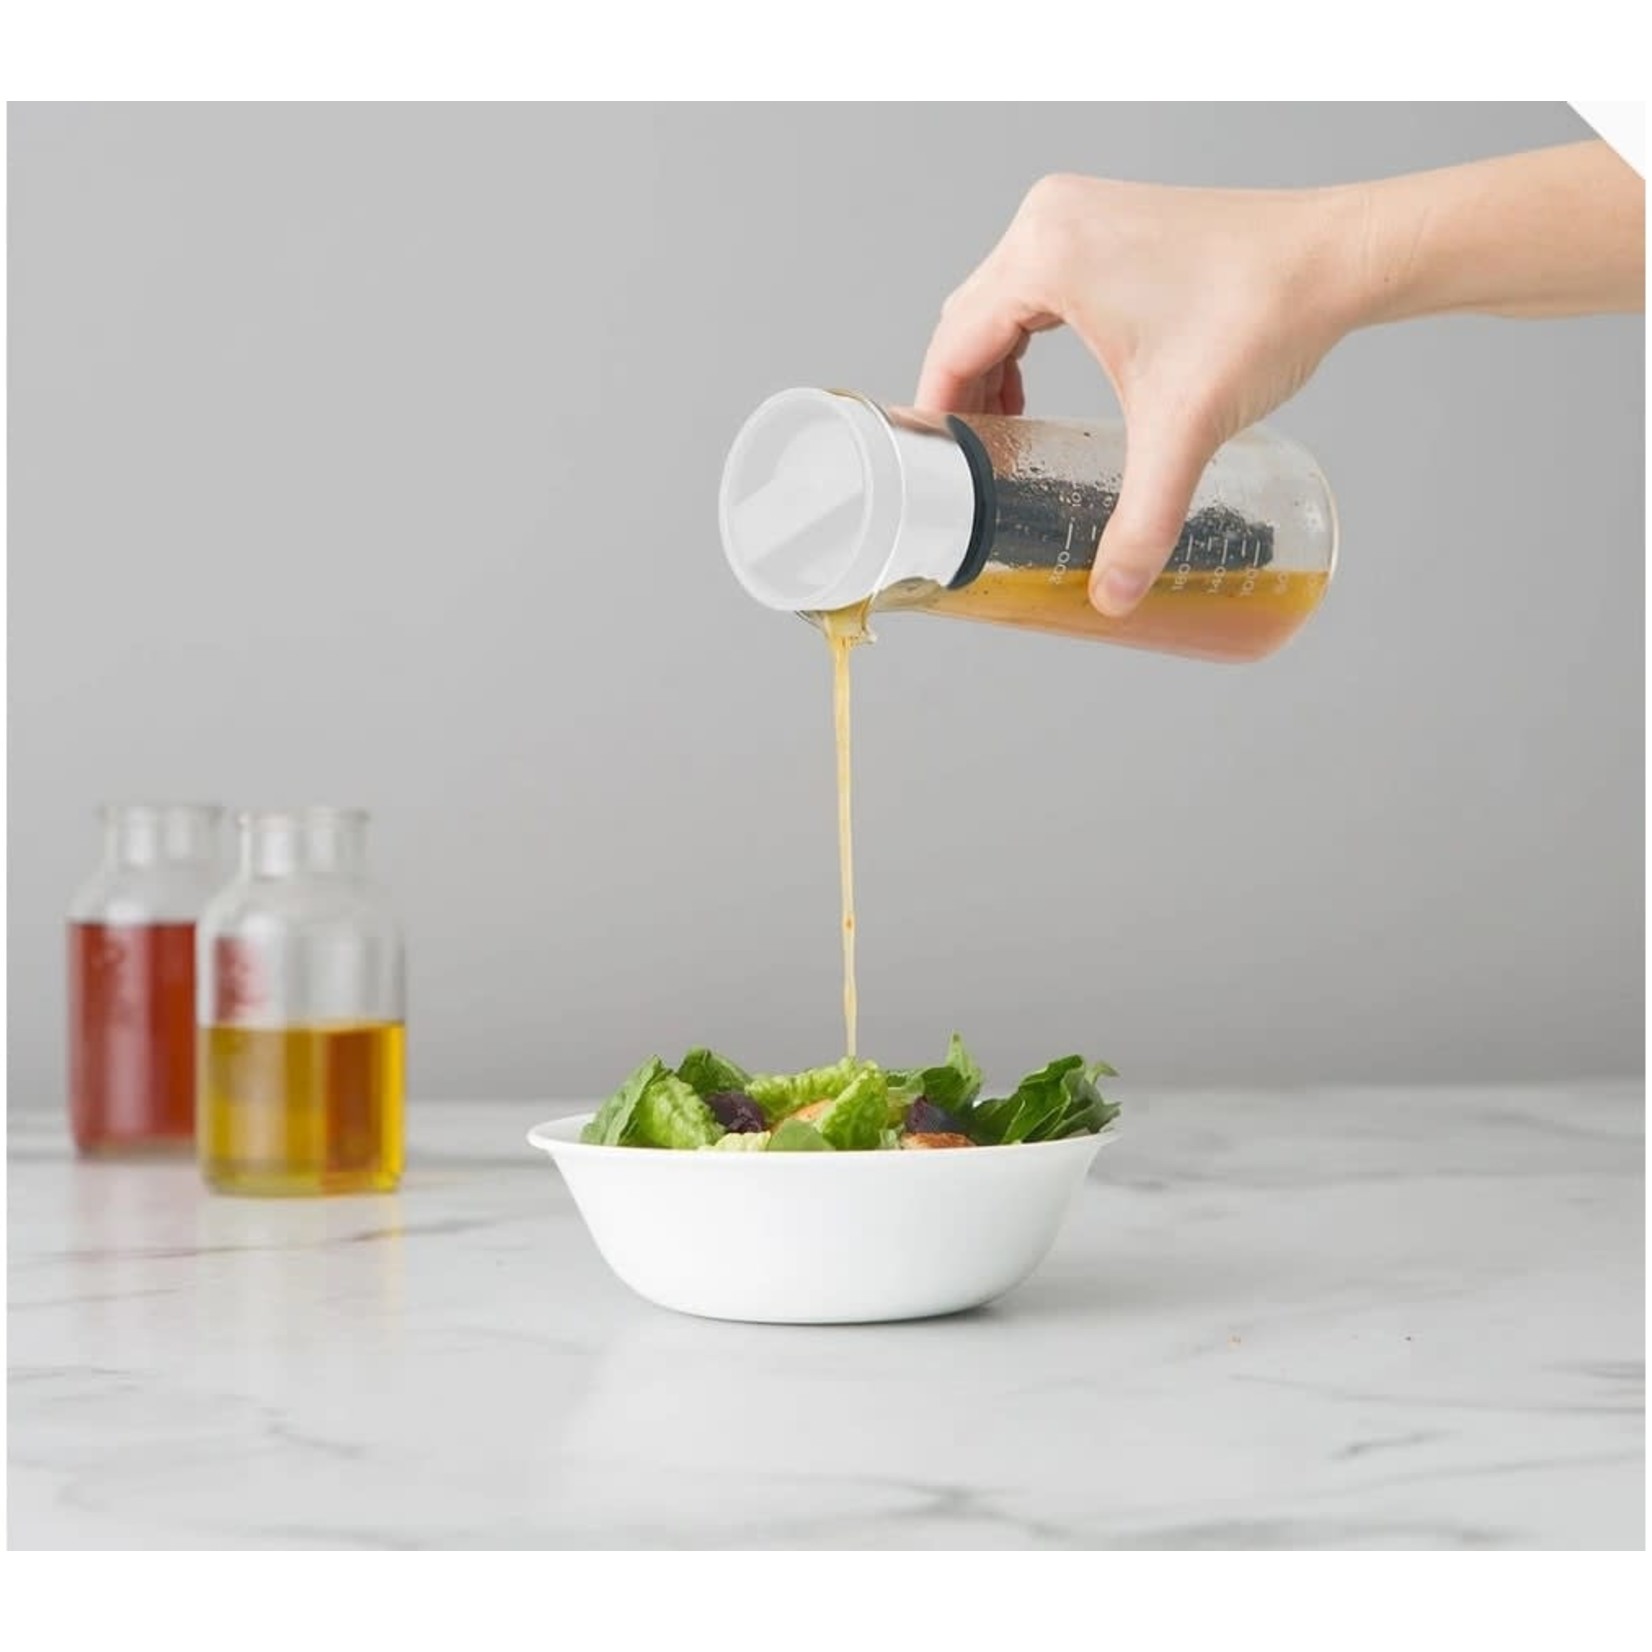 CHEF'N CHEF'N Emulstir Glass Salad Dressing Mixer 2.0